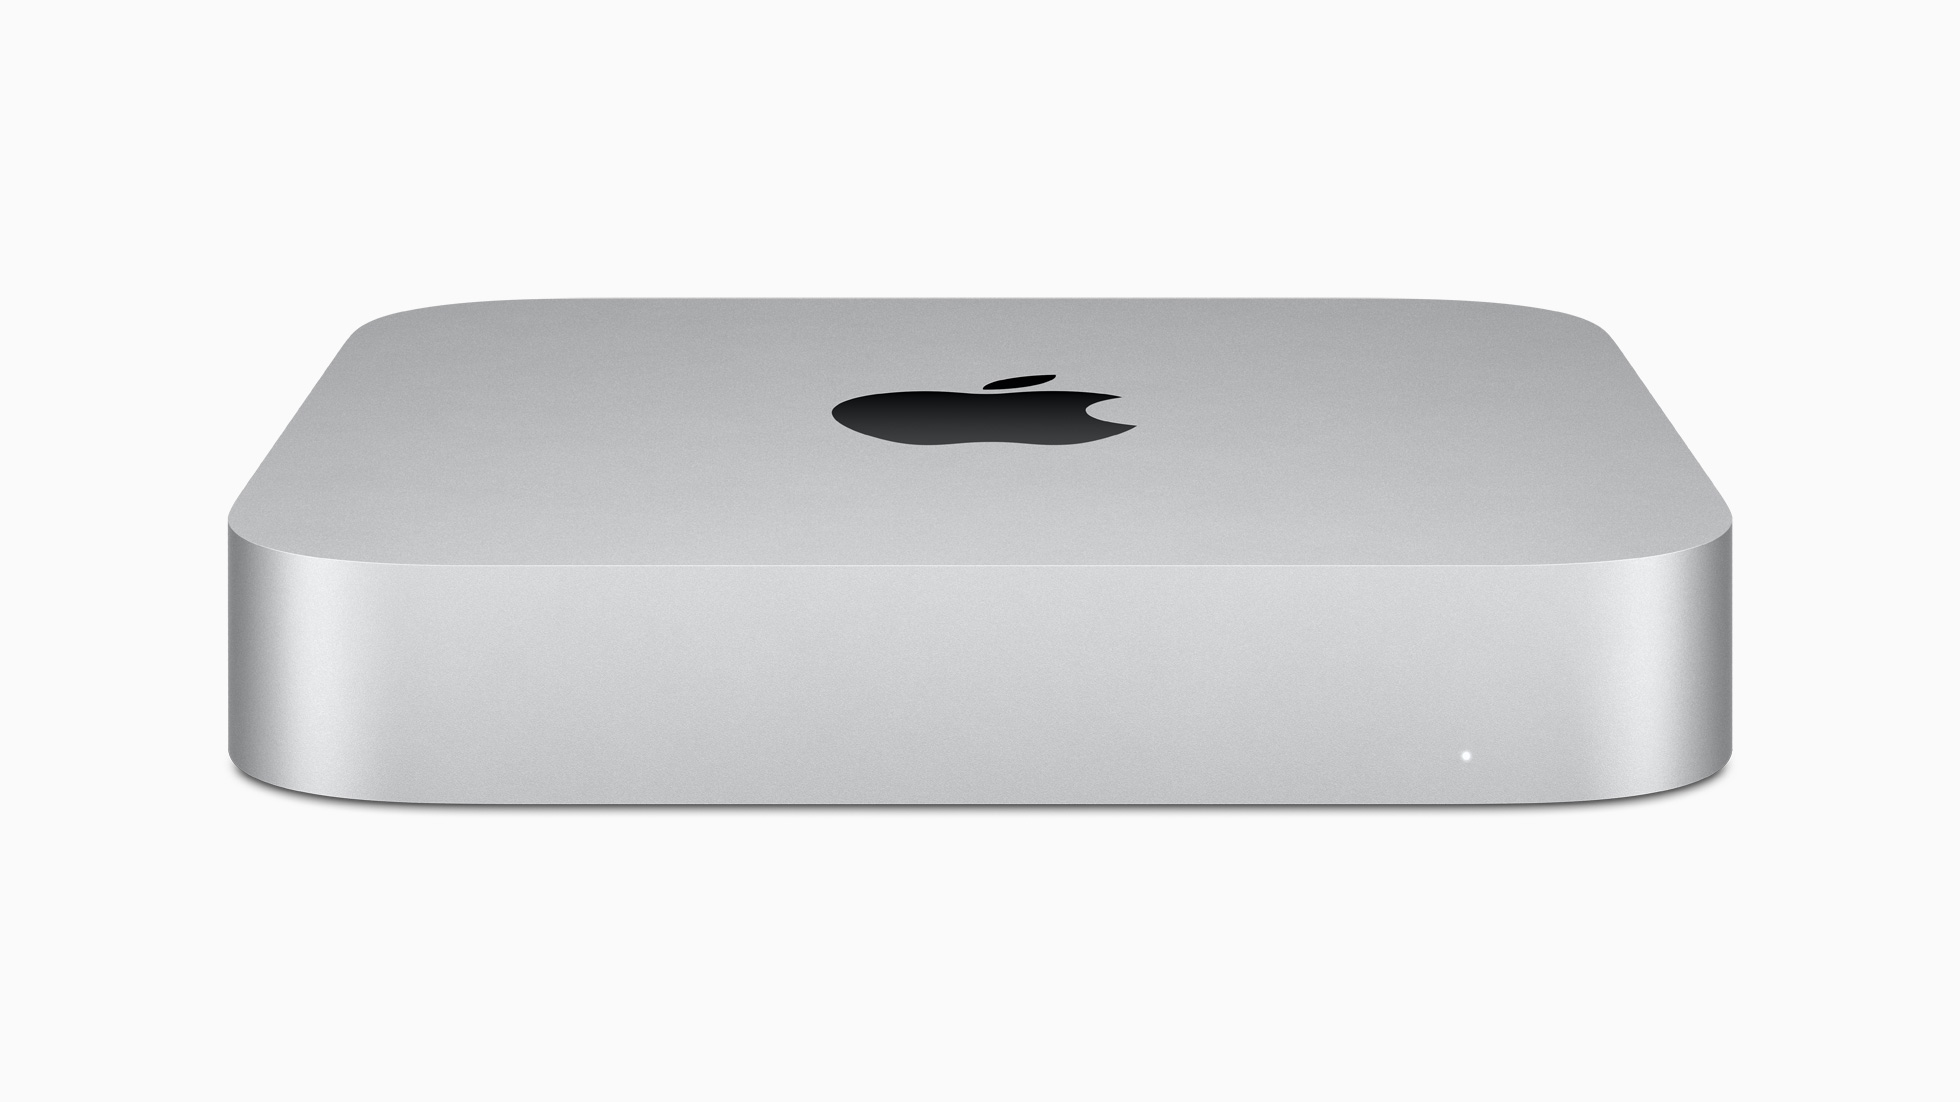 2020 M1 Mac mini. Image: Apple.